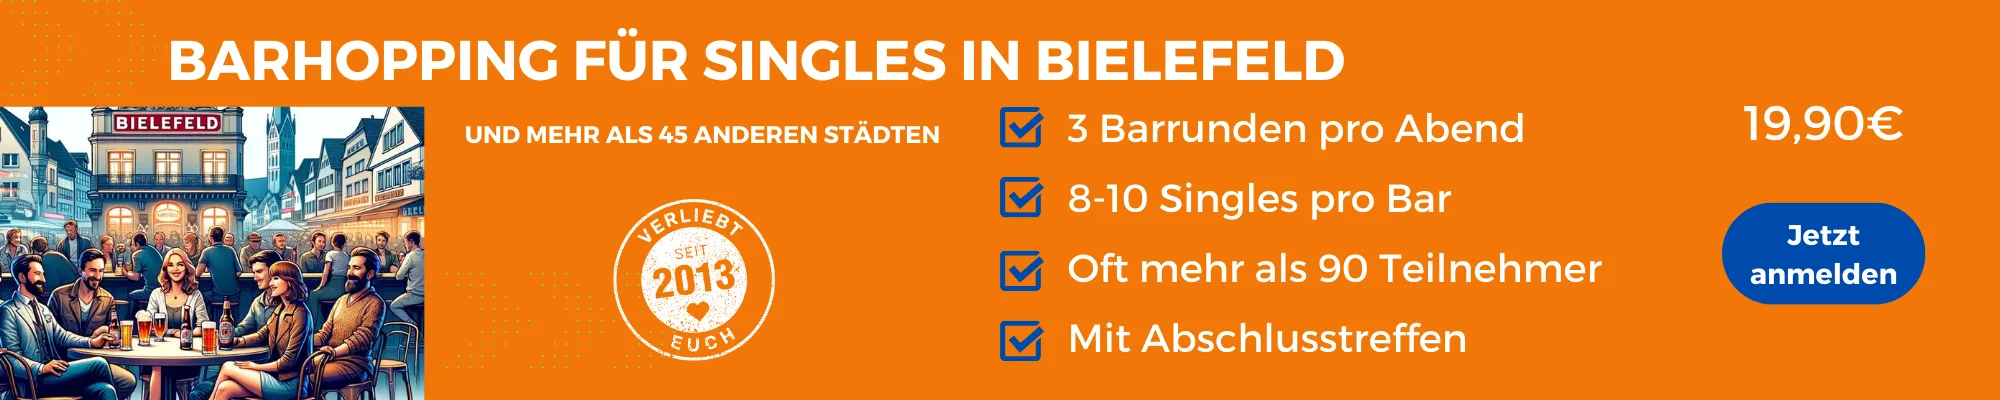 Face to Face Bielefeld, Barhopping für Singles